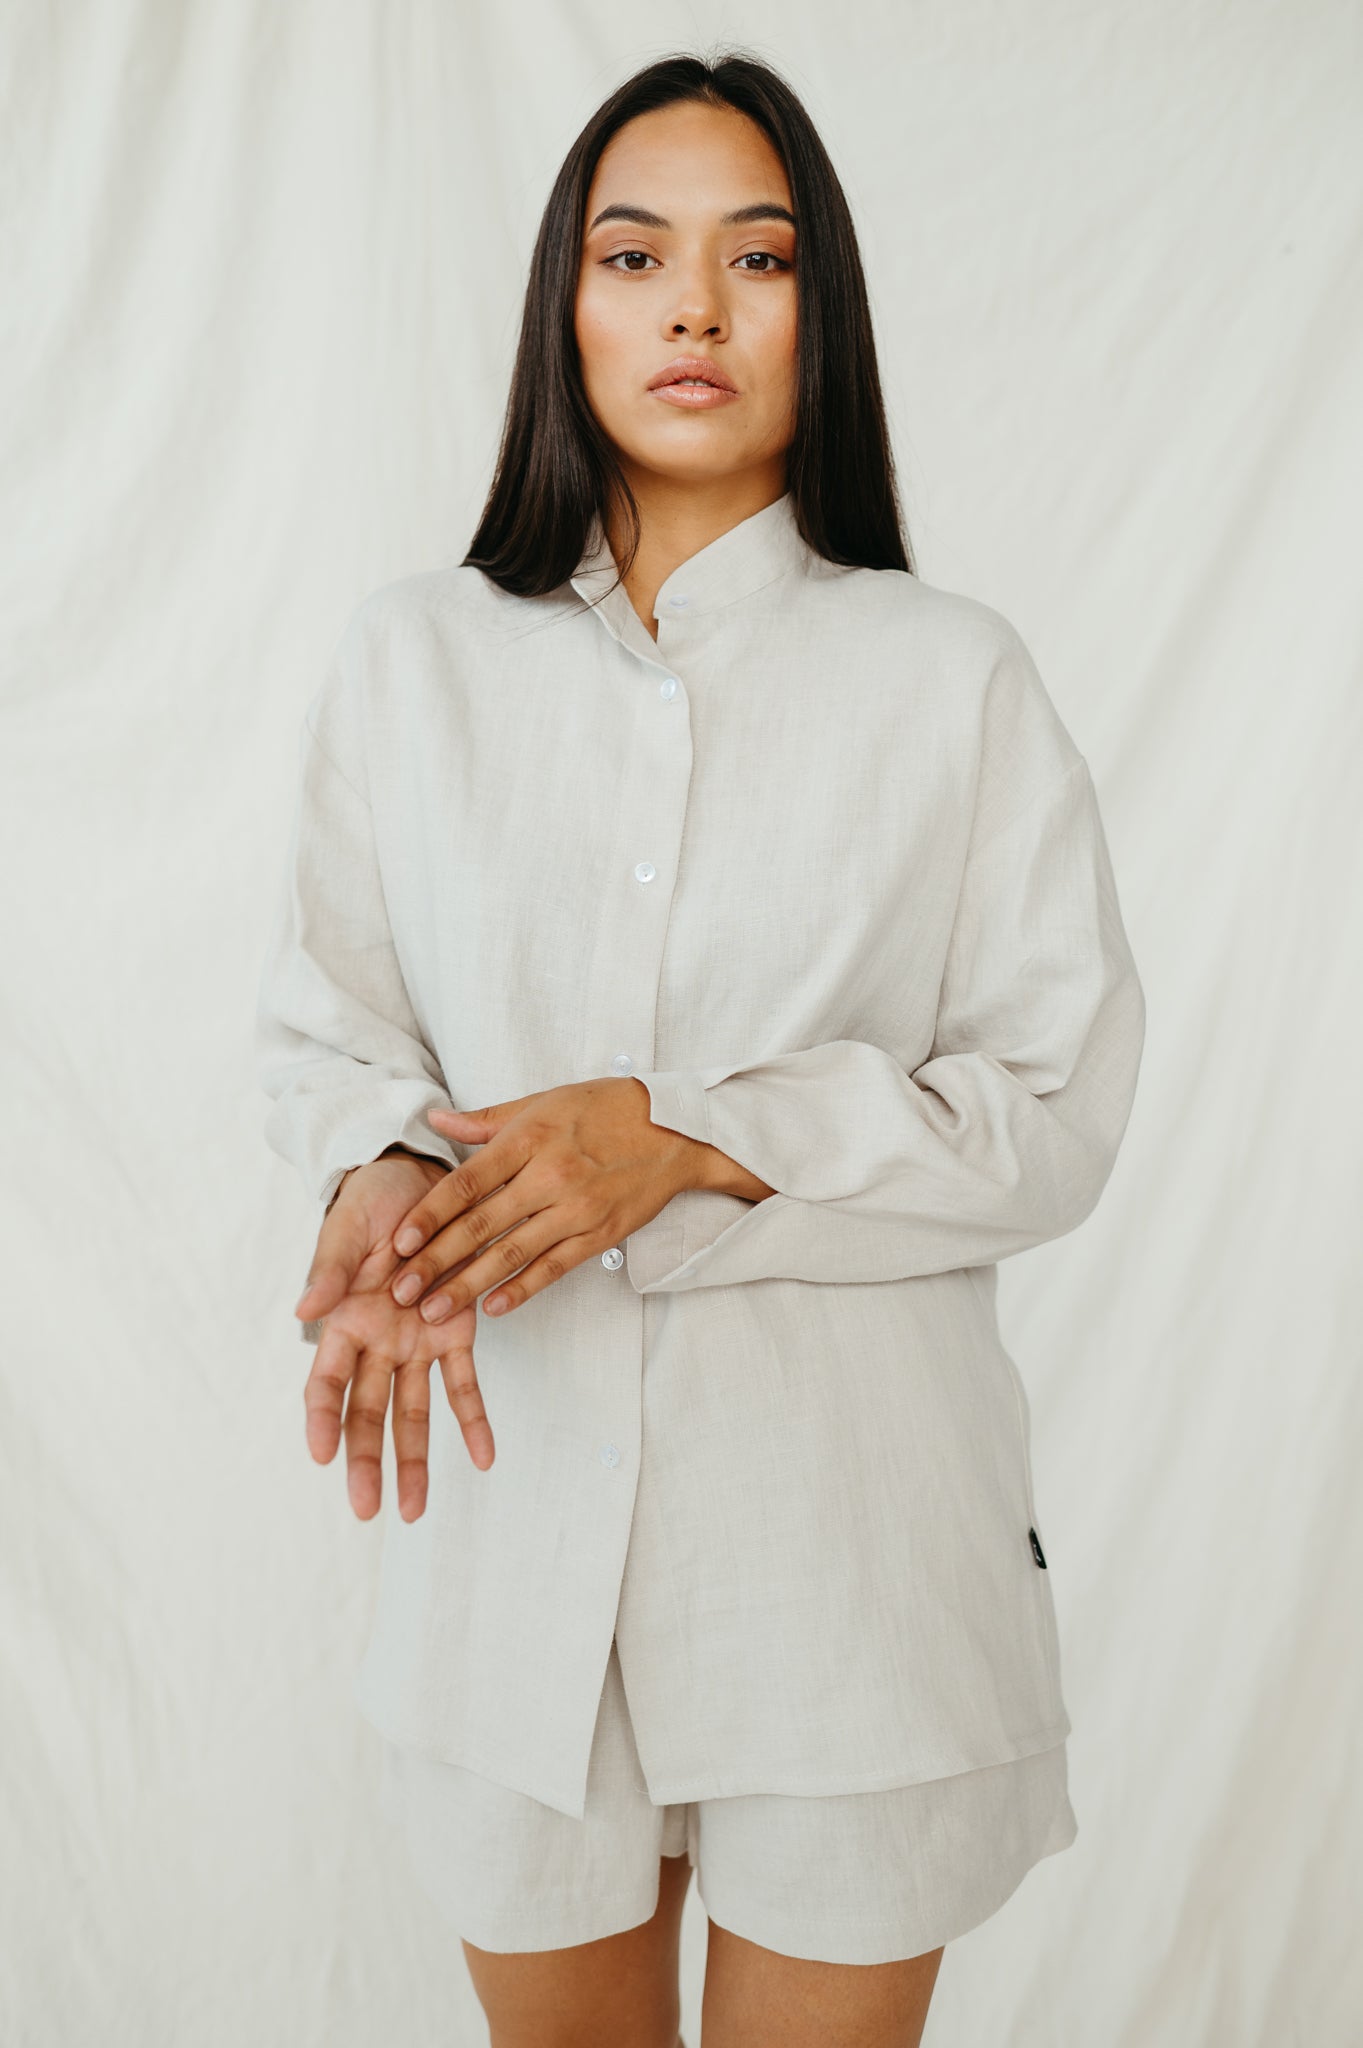 Beige color linen buttoned shirt SAMALA – Sofa Killer super warm